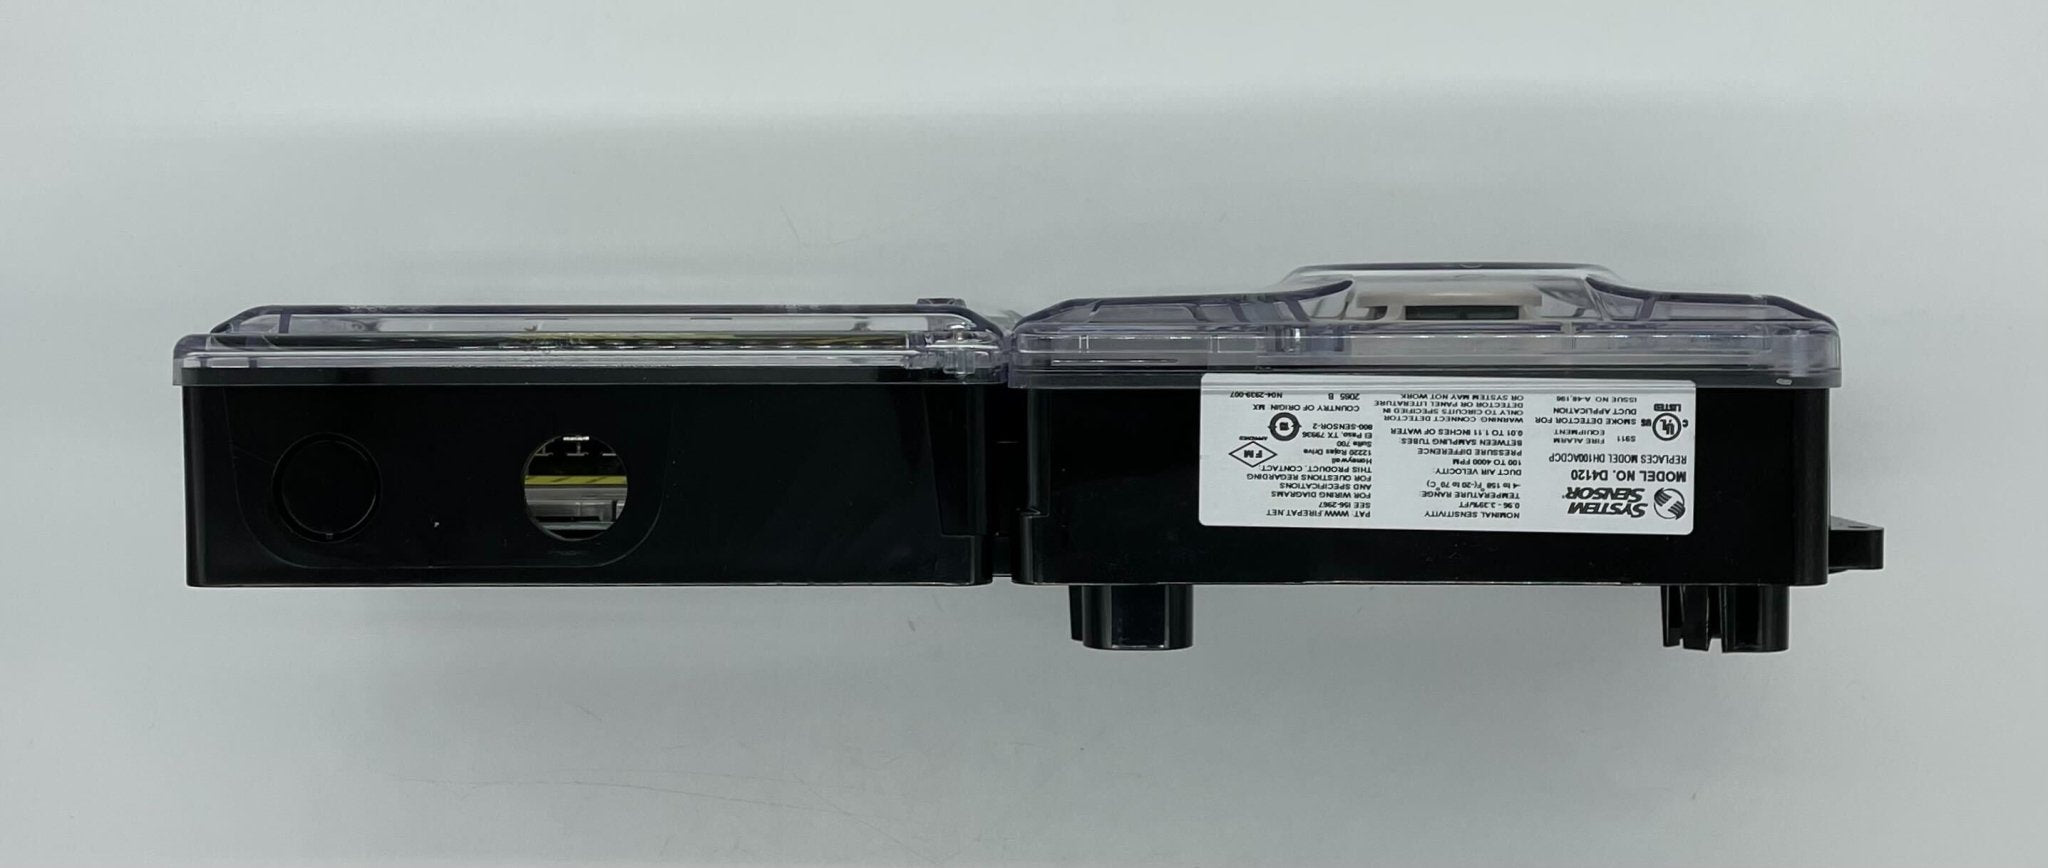 System Sensor D4120 - The Fire Alarm Supplier